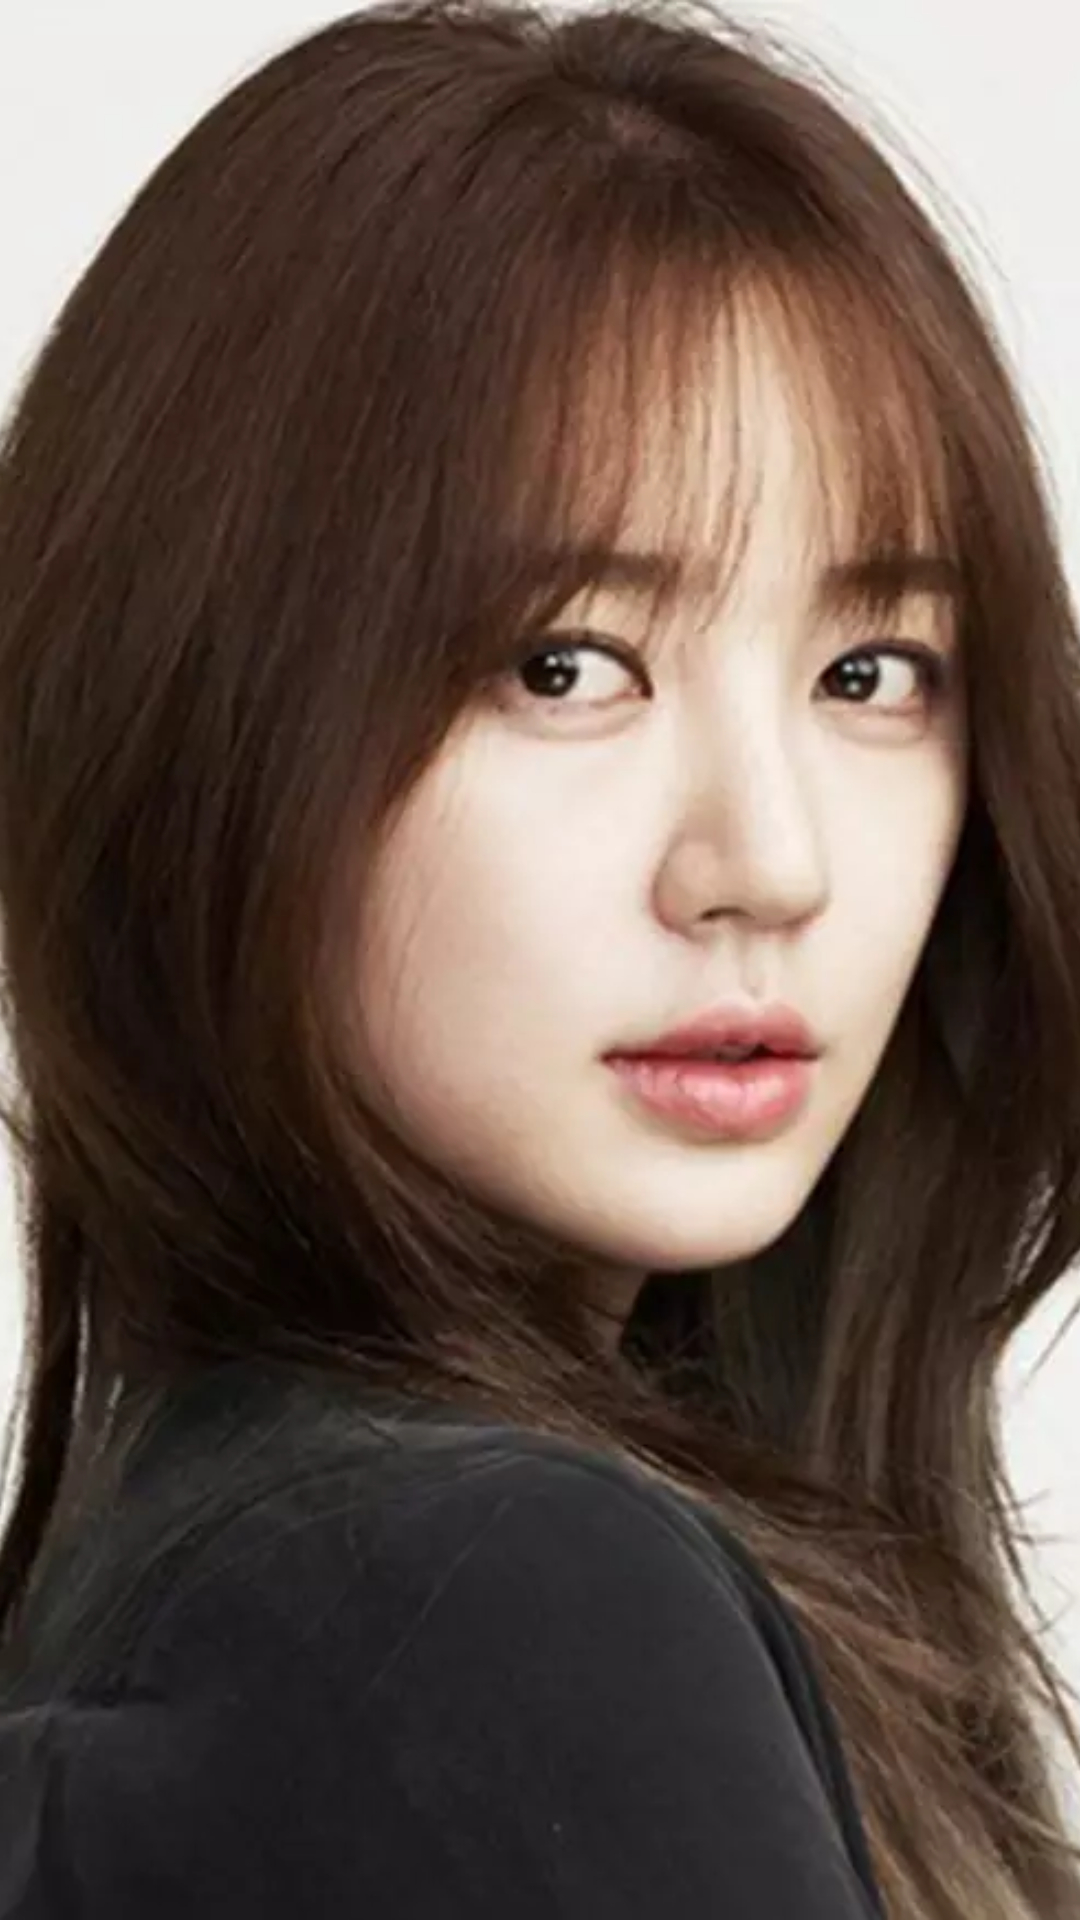 Coffee Prince to Lie to Me: Popular K-Dramas of Yoon Eun Hye